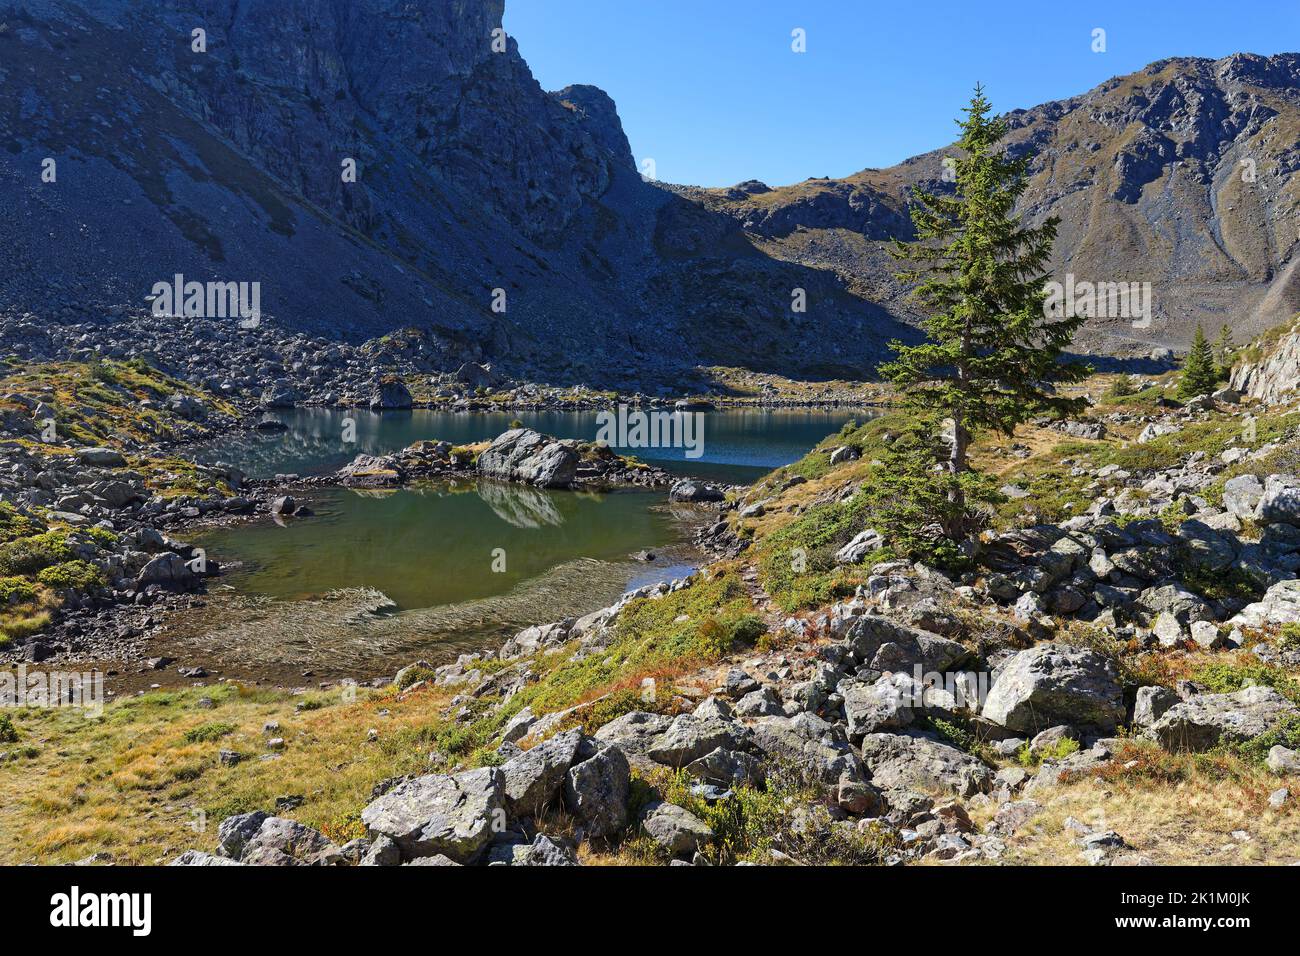 Rocks and trees around the small thrid mountain lake of Lacs Robert Stock Photo